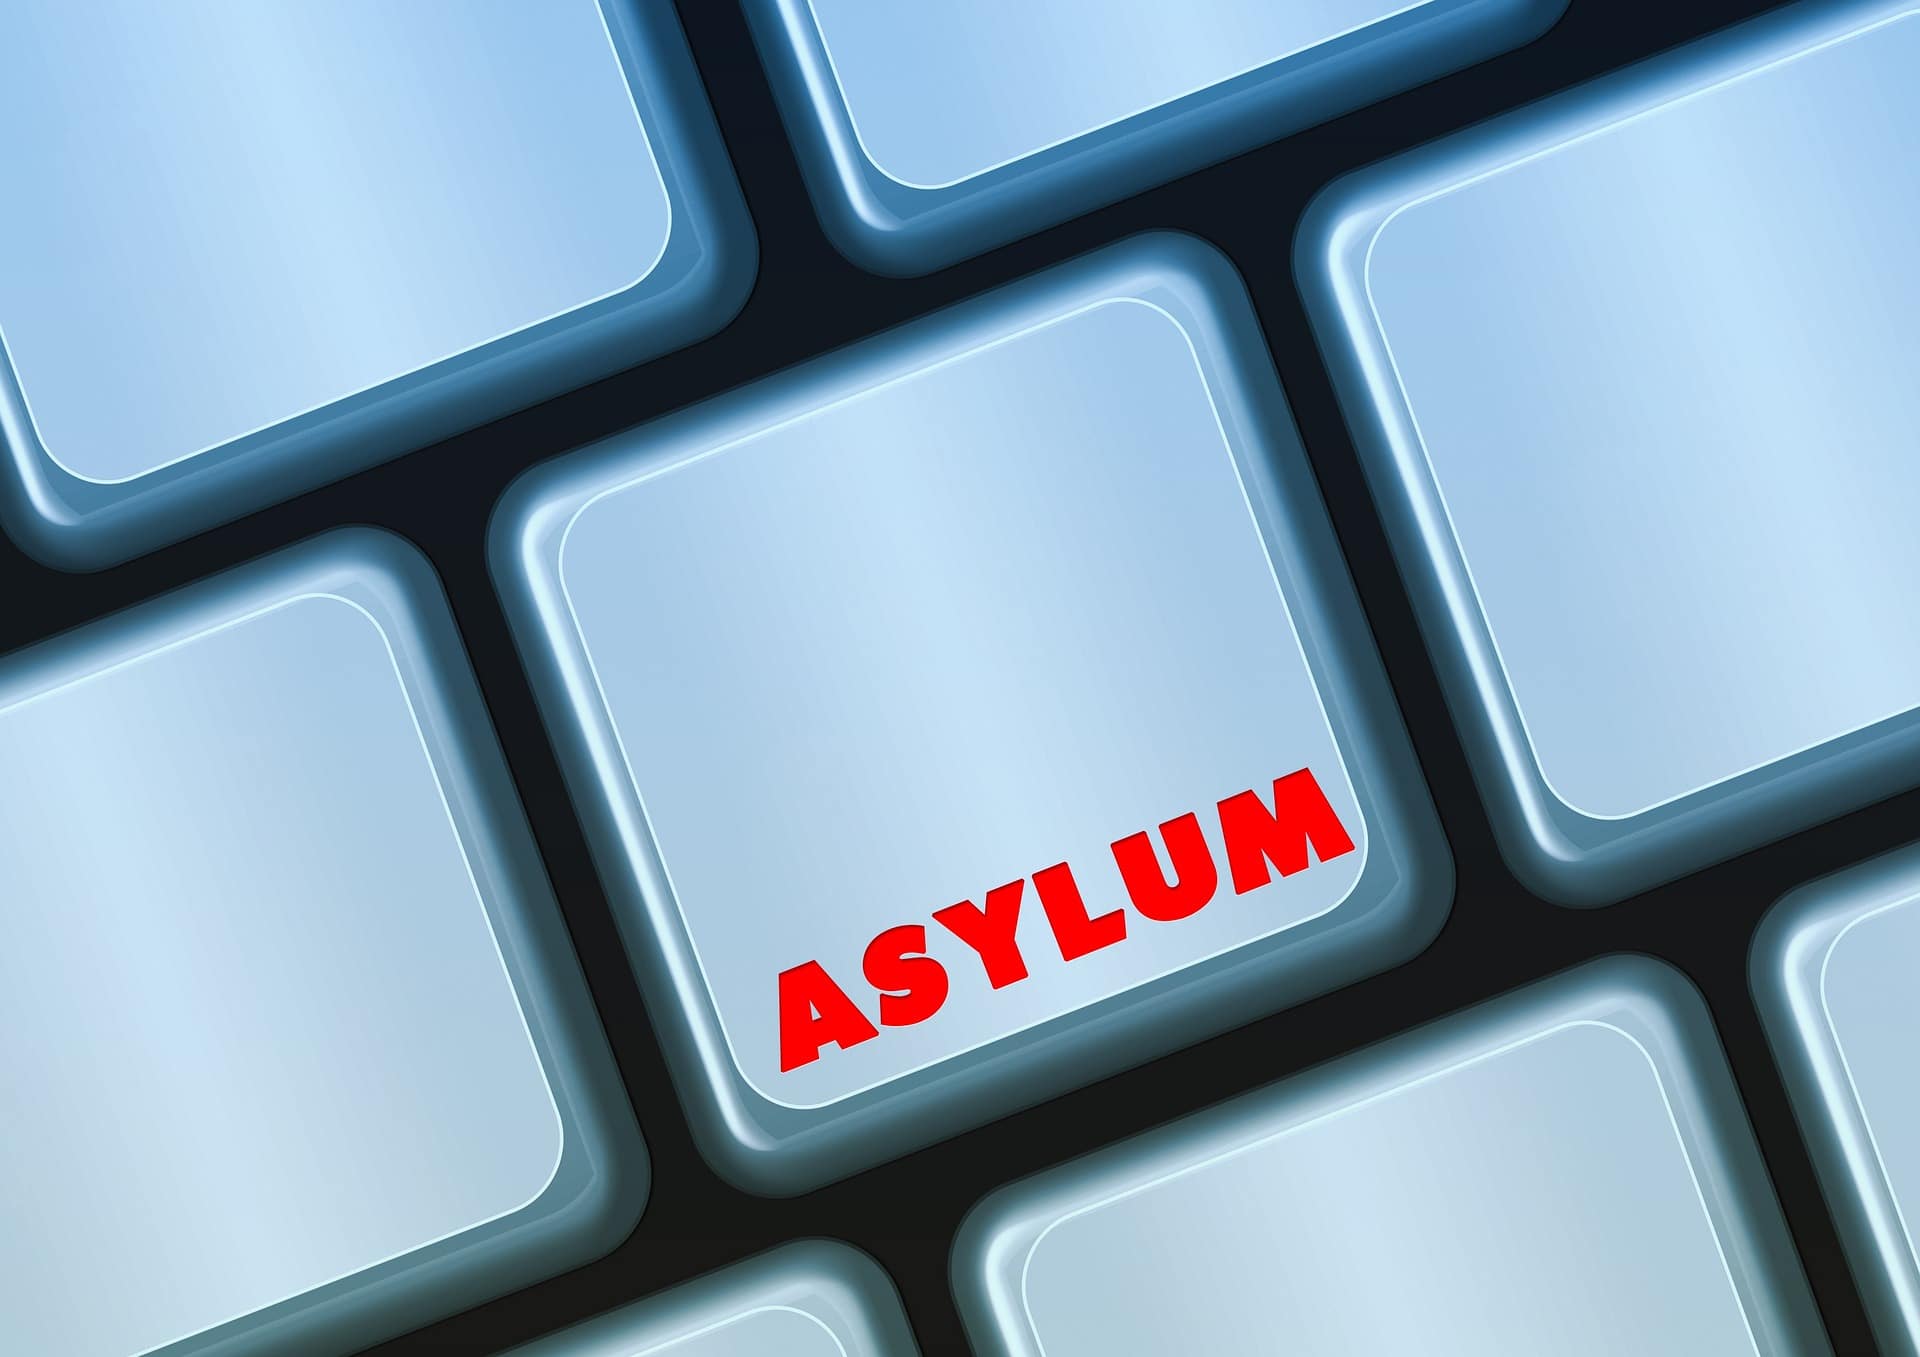 Maidstone lie detector test, Immigration status, asylum seeker UK